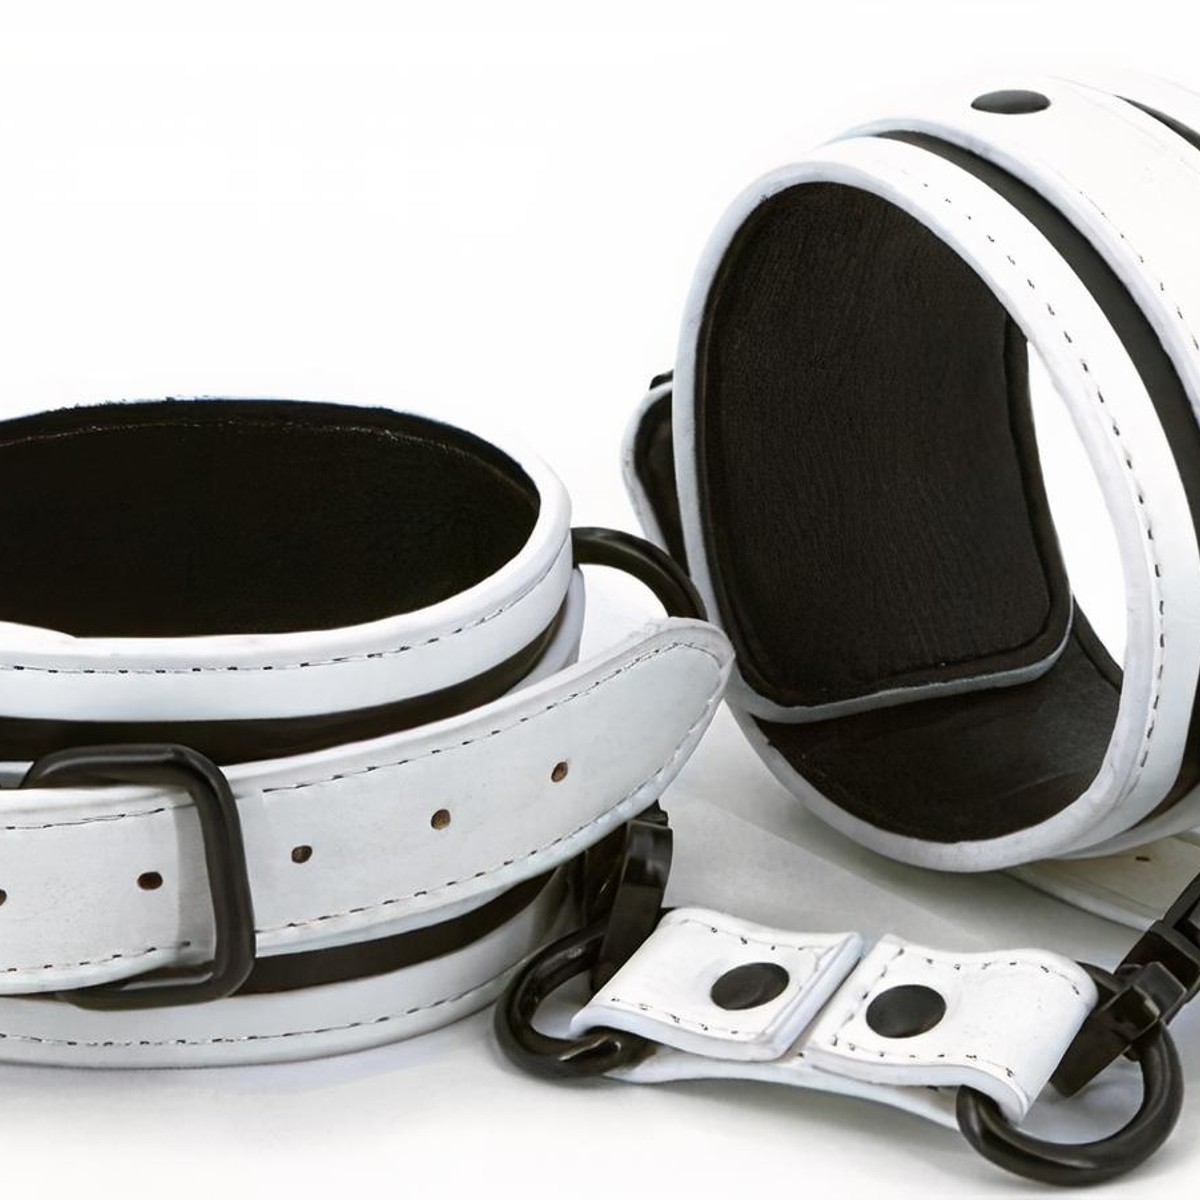  CalExotics Novelties Packer Gear Black Boxer Brief Harness  Large/X-Large, Black : Health & Household